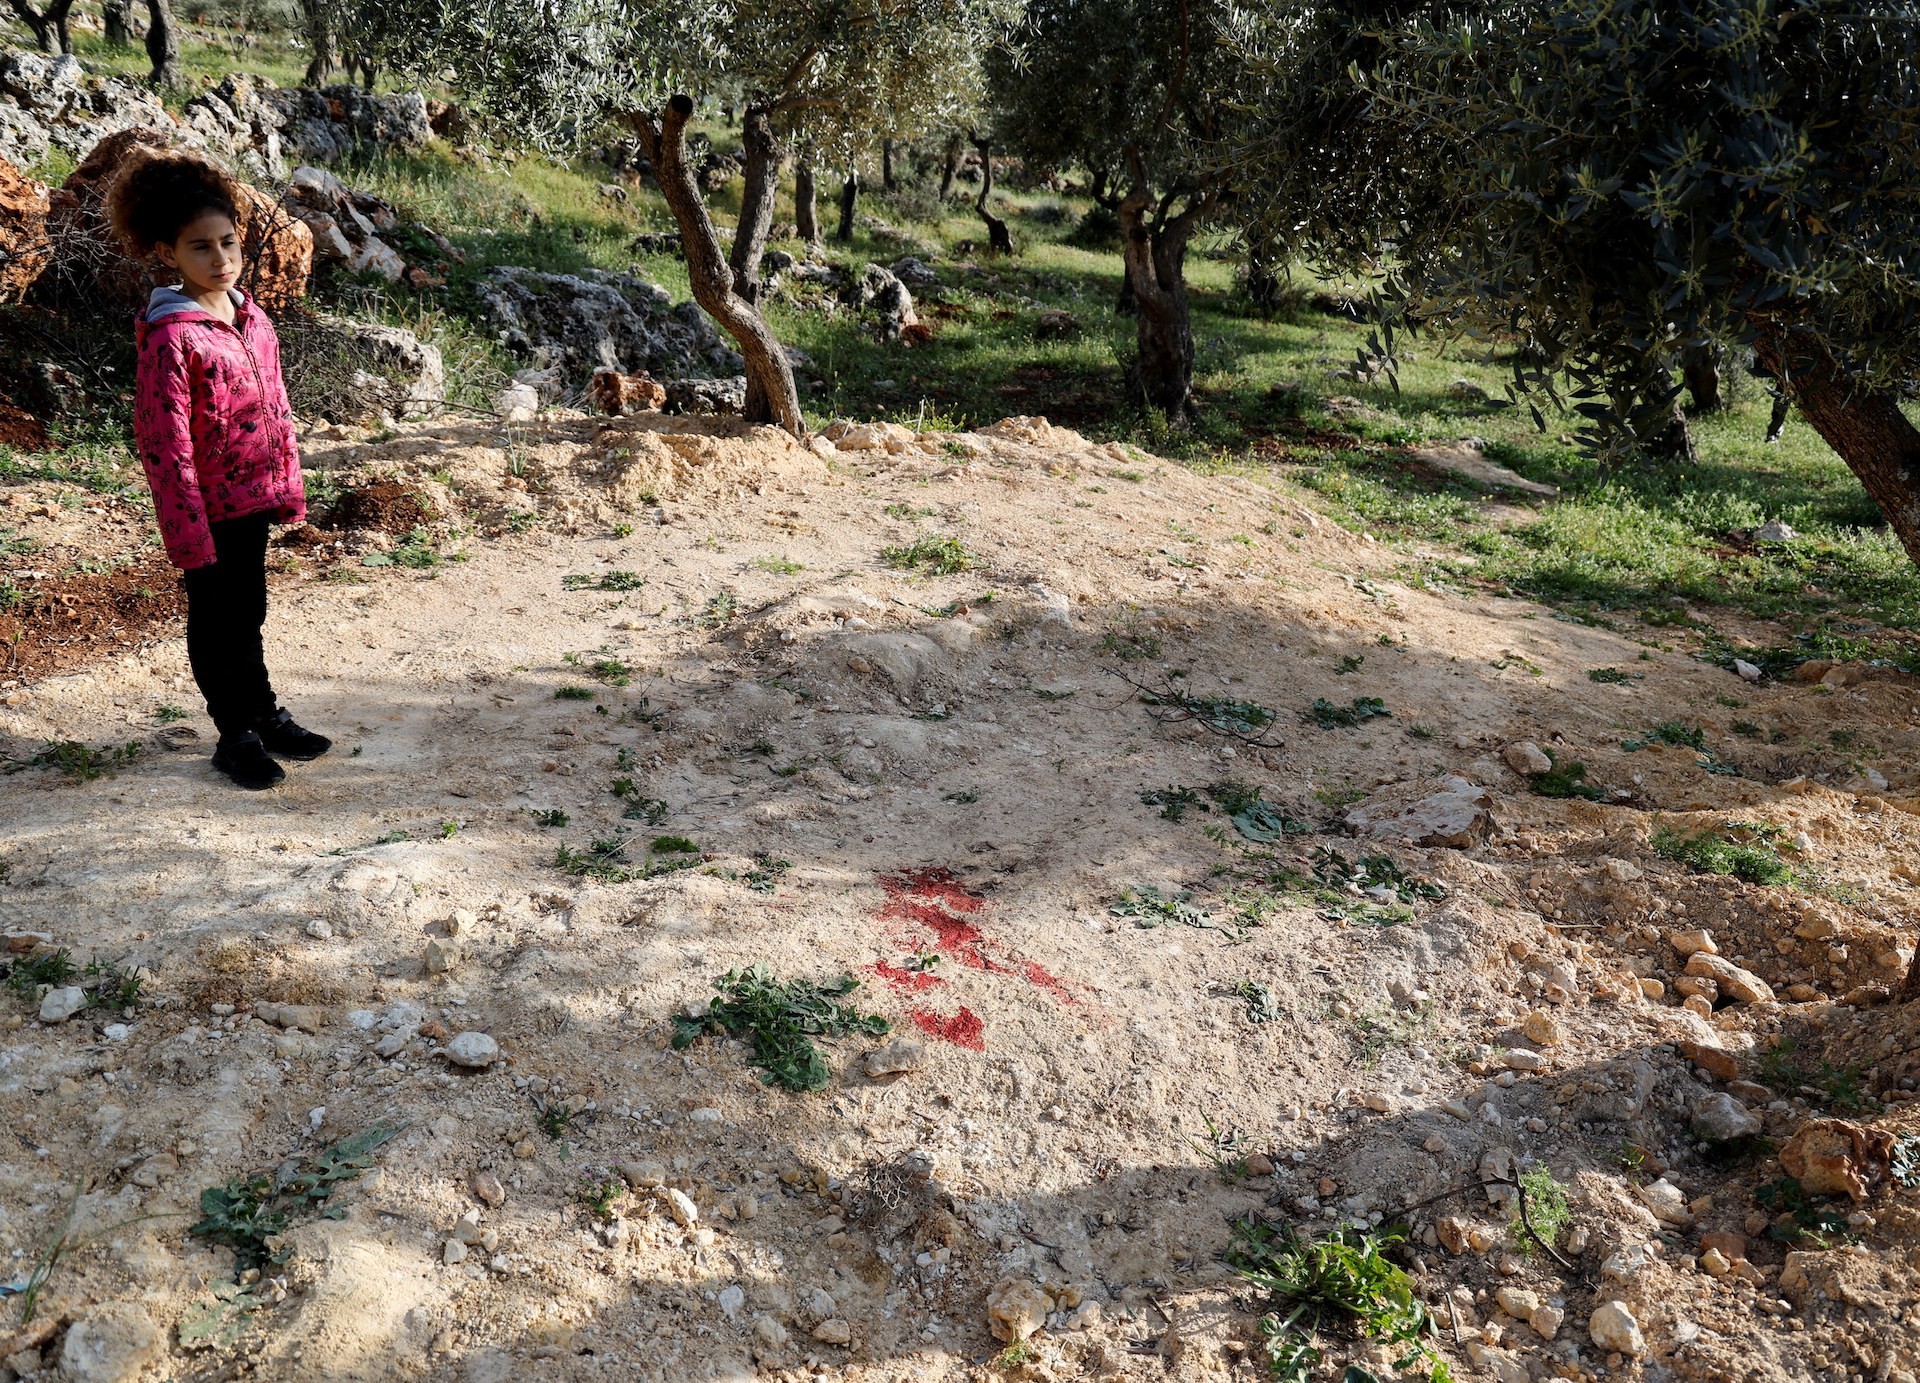 Israeli soldiers kill two Palestinians near Nablus | Israel-Palestine conflict News